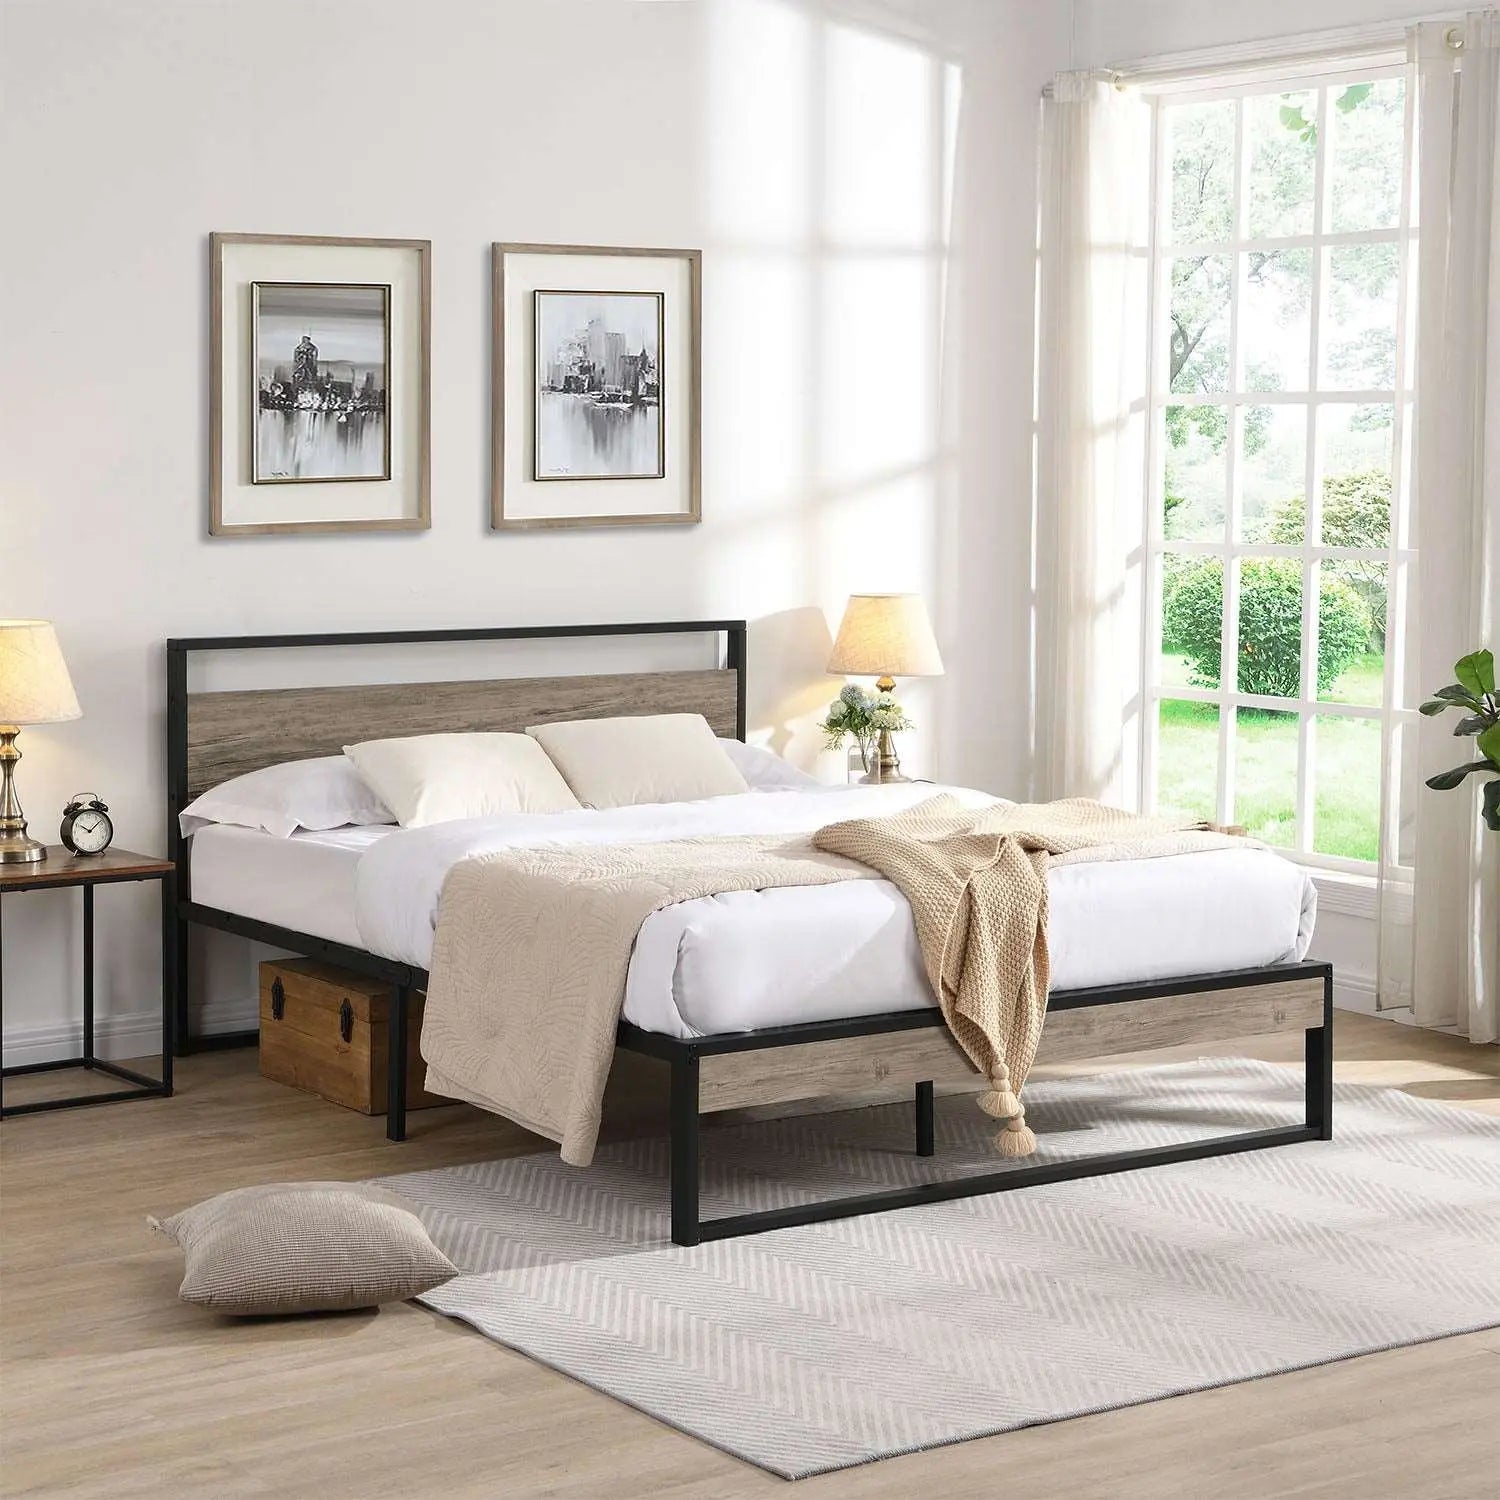 Wood & Metal Fusion design Bed freams Amobro Bed Frames OneSize Amobro